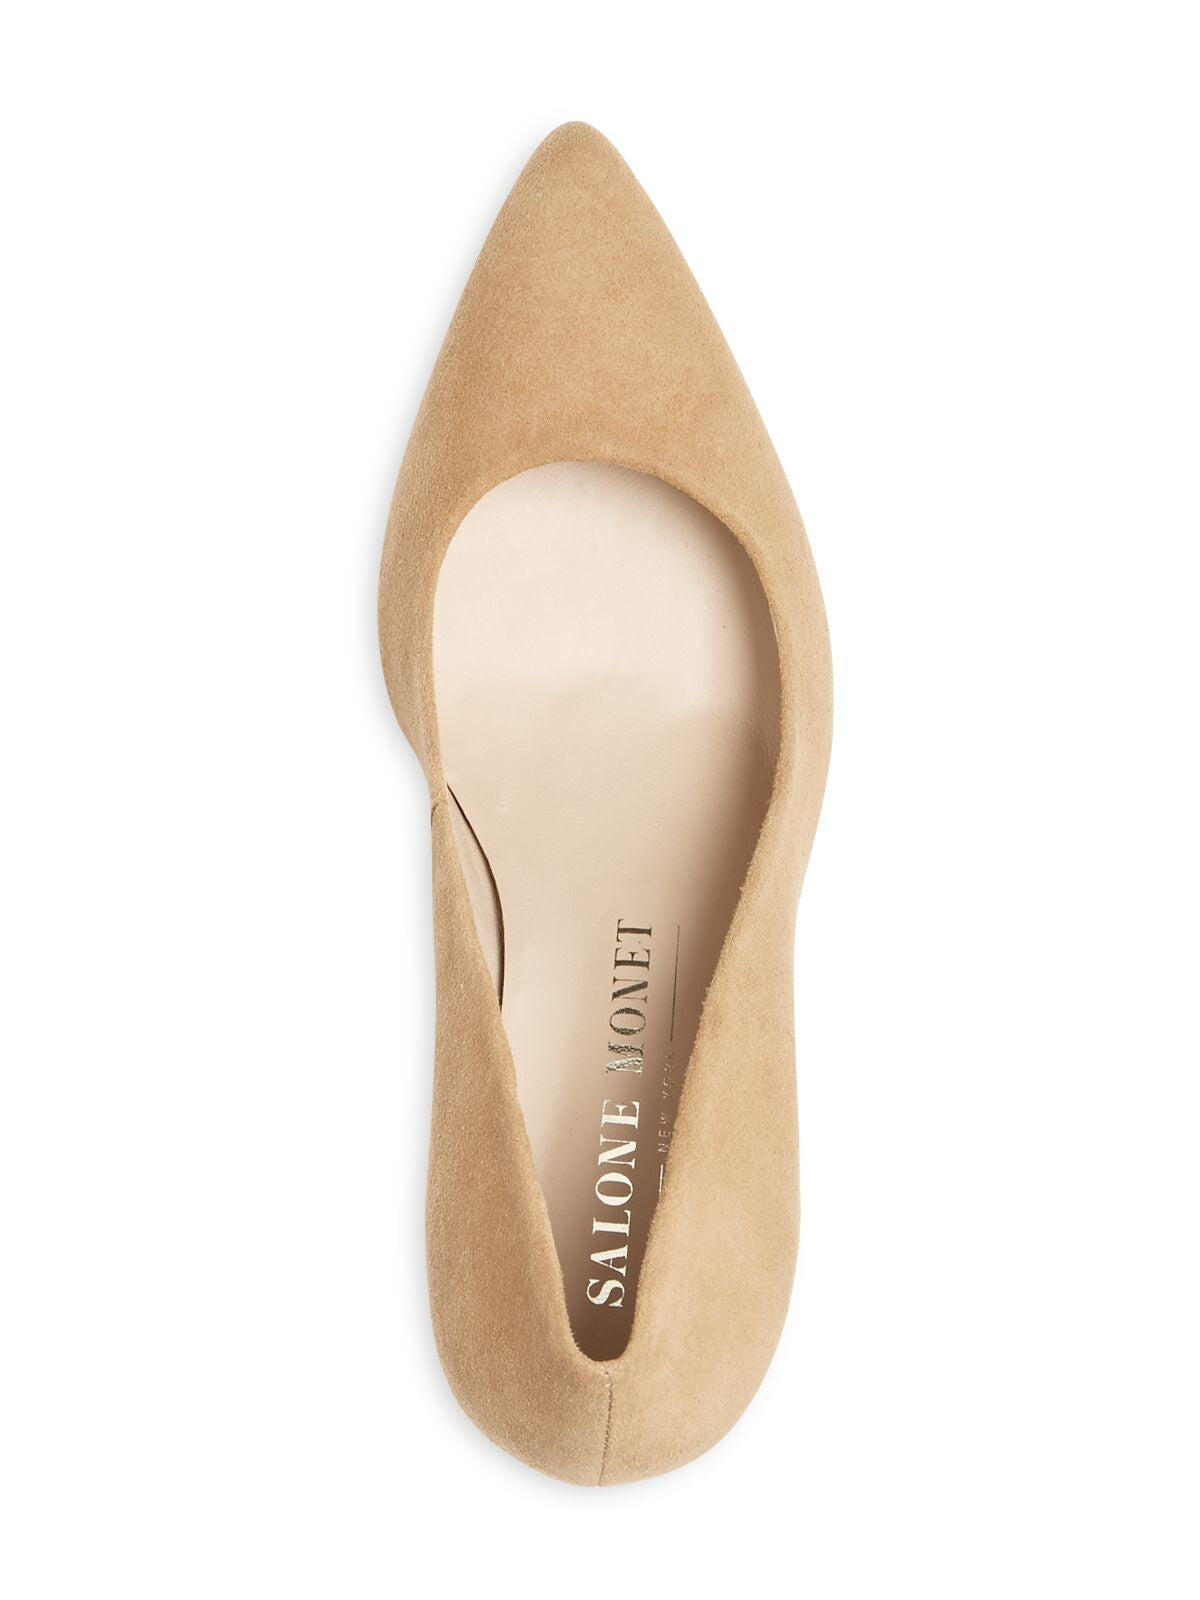 SALONE MONET Womens Beige Recessed 1/2" Platform Comfort Anita Almond Toe Stiletto Slip On Dress Pumps Shoes M